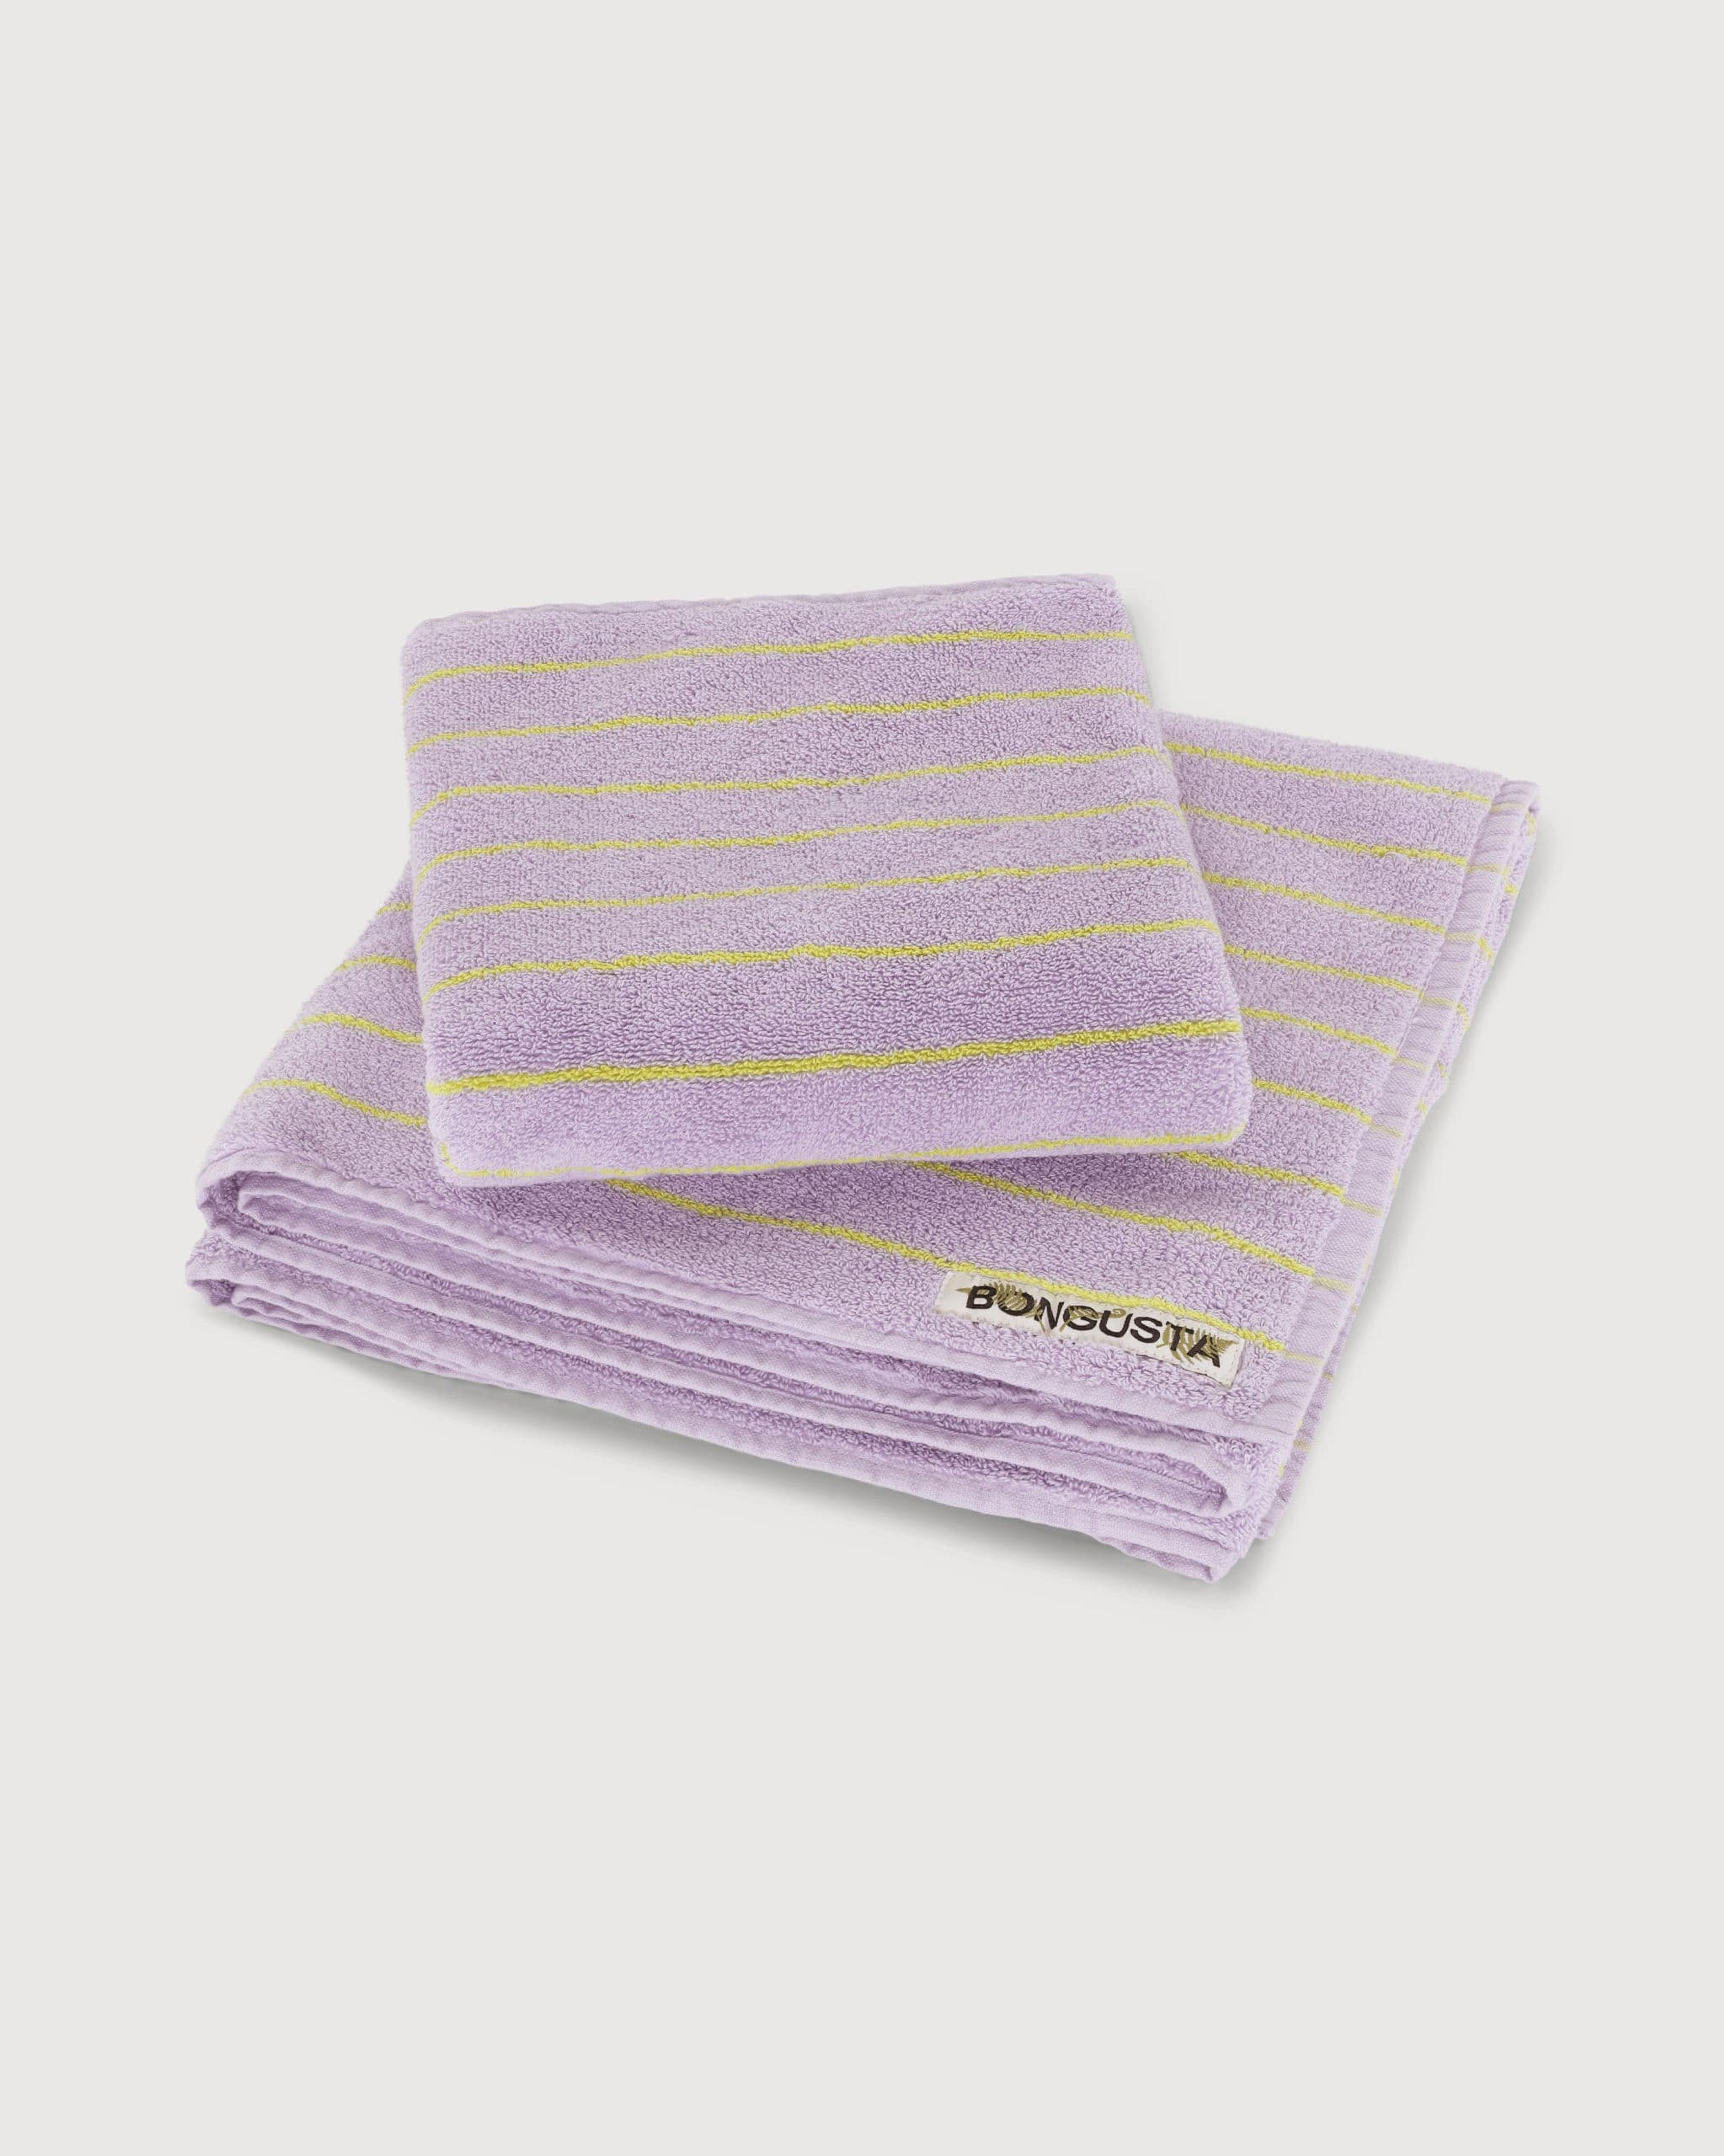 Naram towel - Lilac & Neon yellow - Guest 50x80cm
										
											175,00 kr.